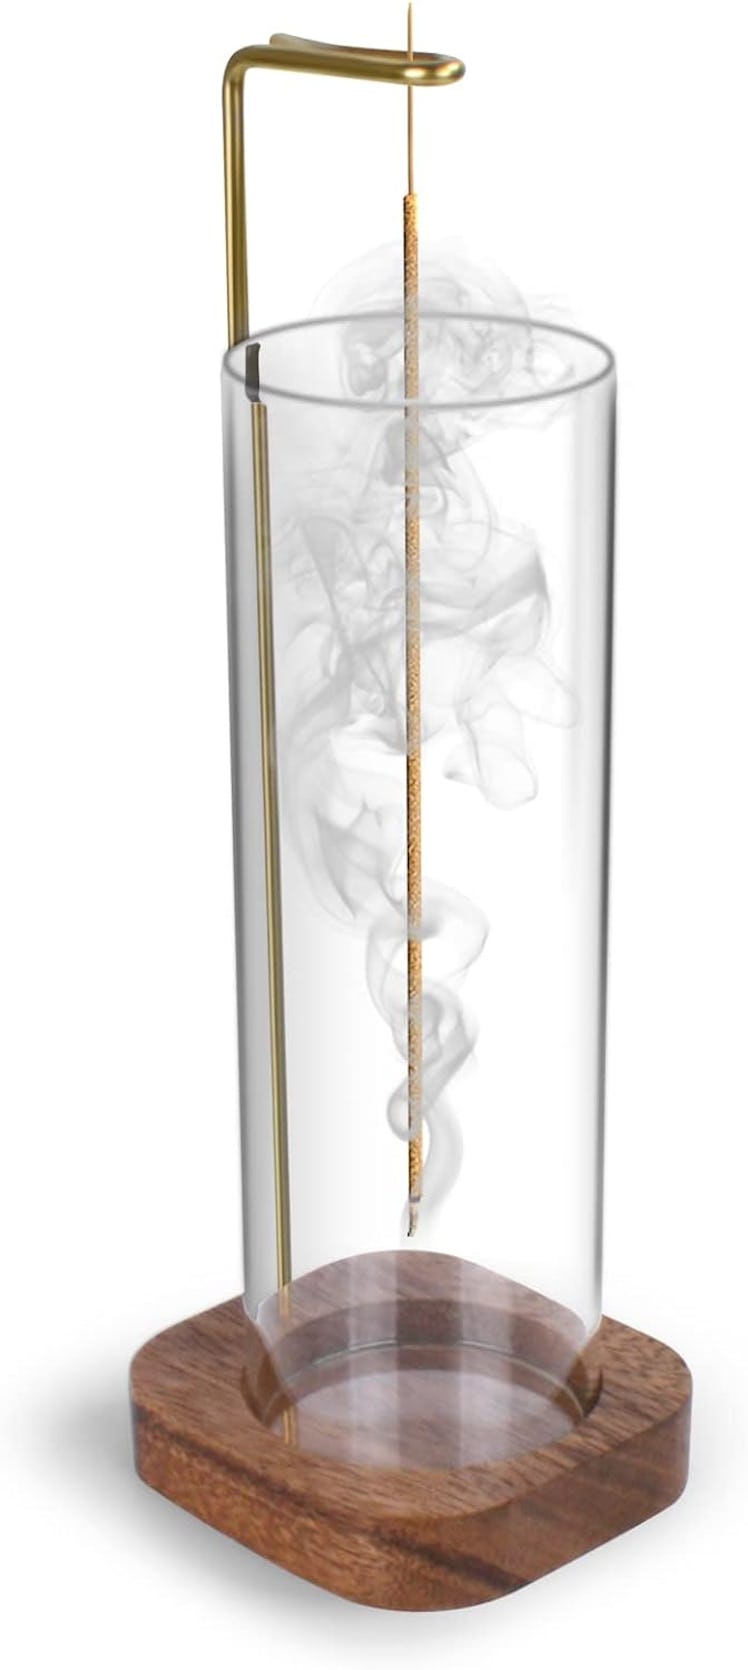 YHAOEN Glass Catcher Incense Holder